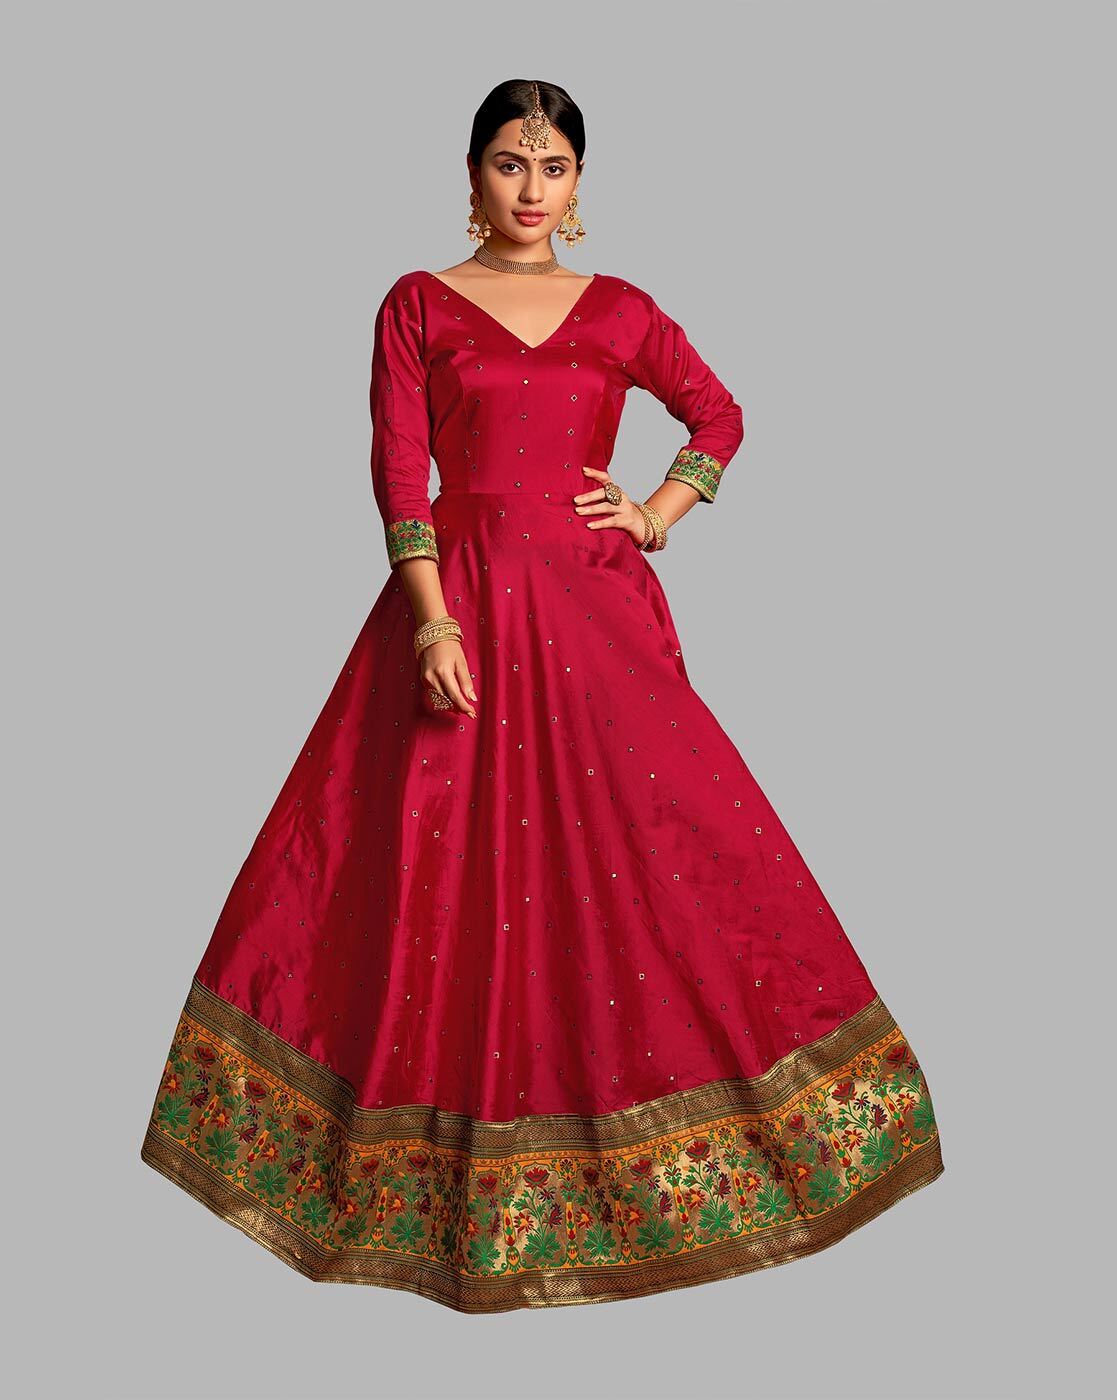 Women's Ethnic Clothing Online - Buy Salwar Kameez, Lehengas, Sarees/Saris,  Gowns & Kurtis - Seasons India